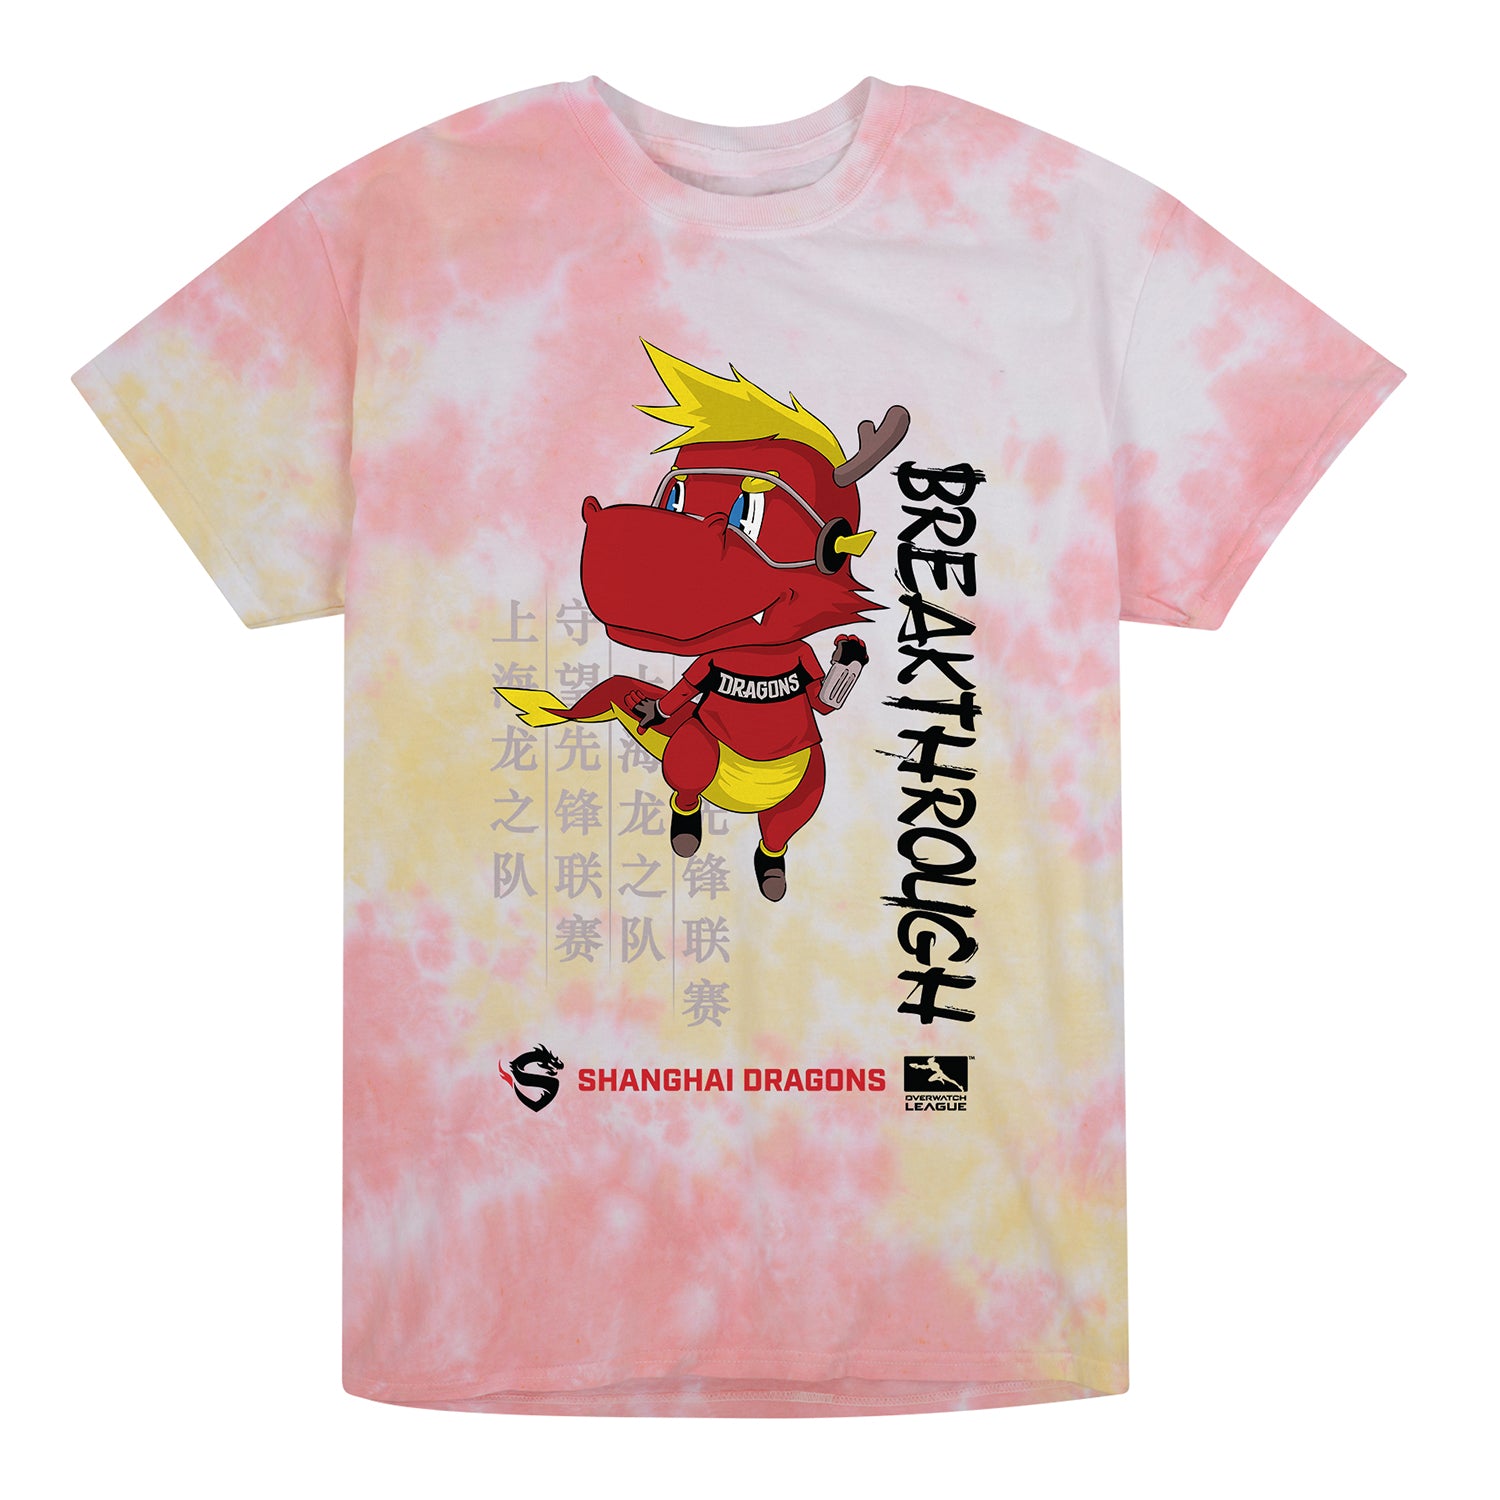 Shanghai Dragons Tie-Dye Chibi Mascot T-Shirt - Front View